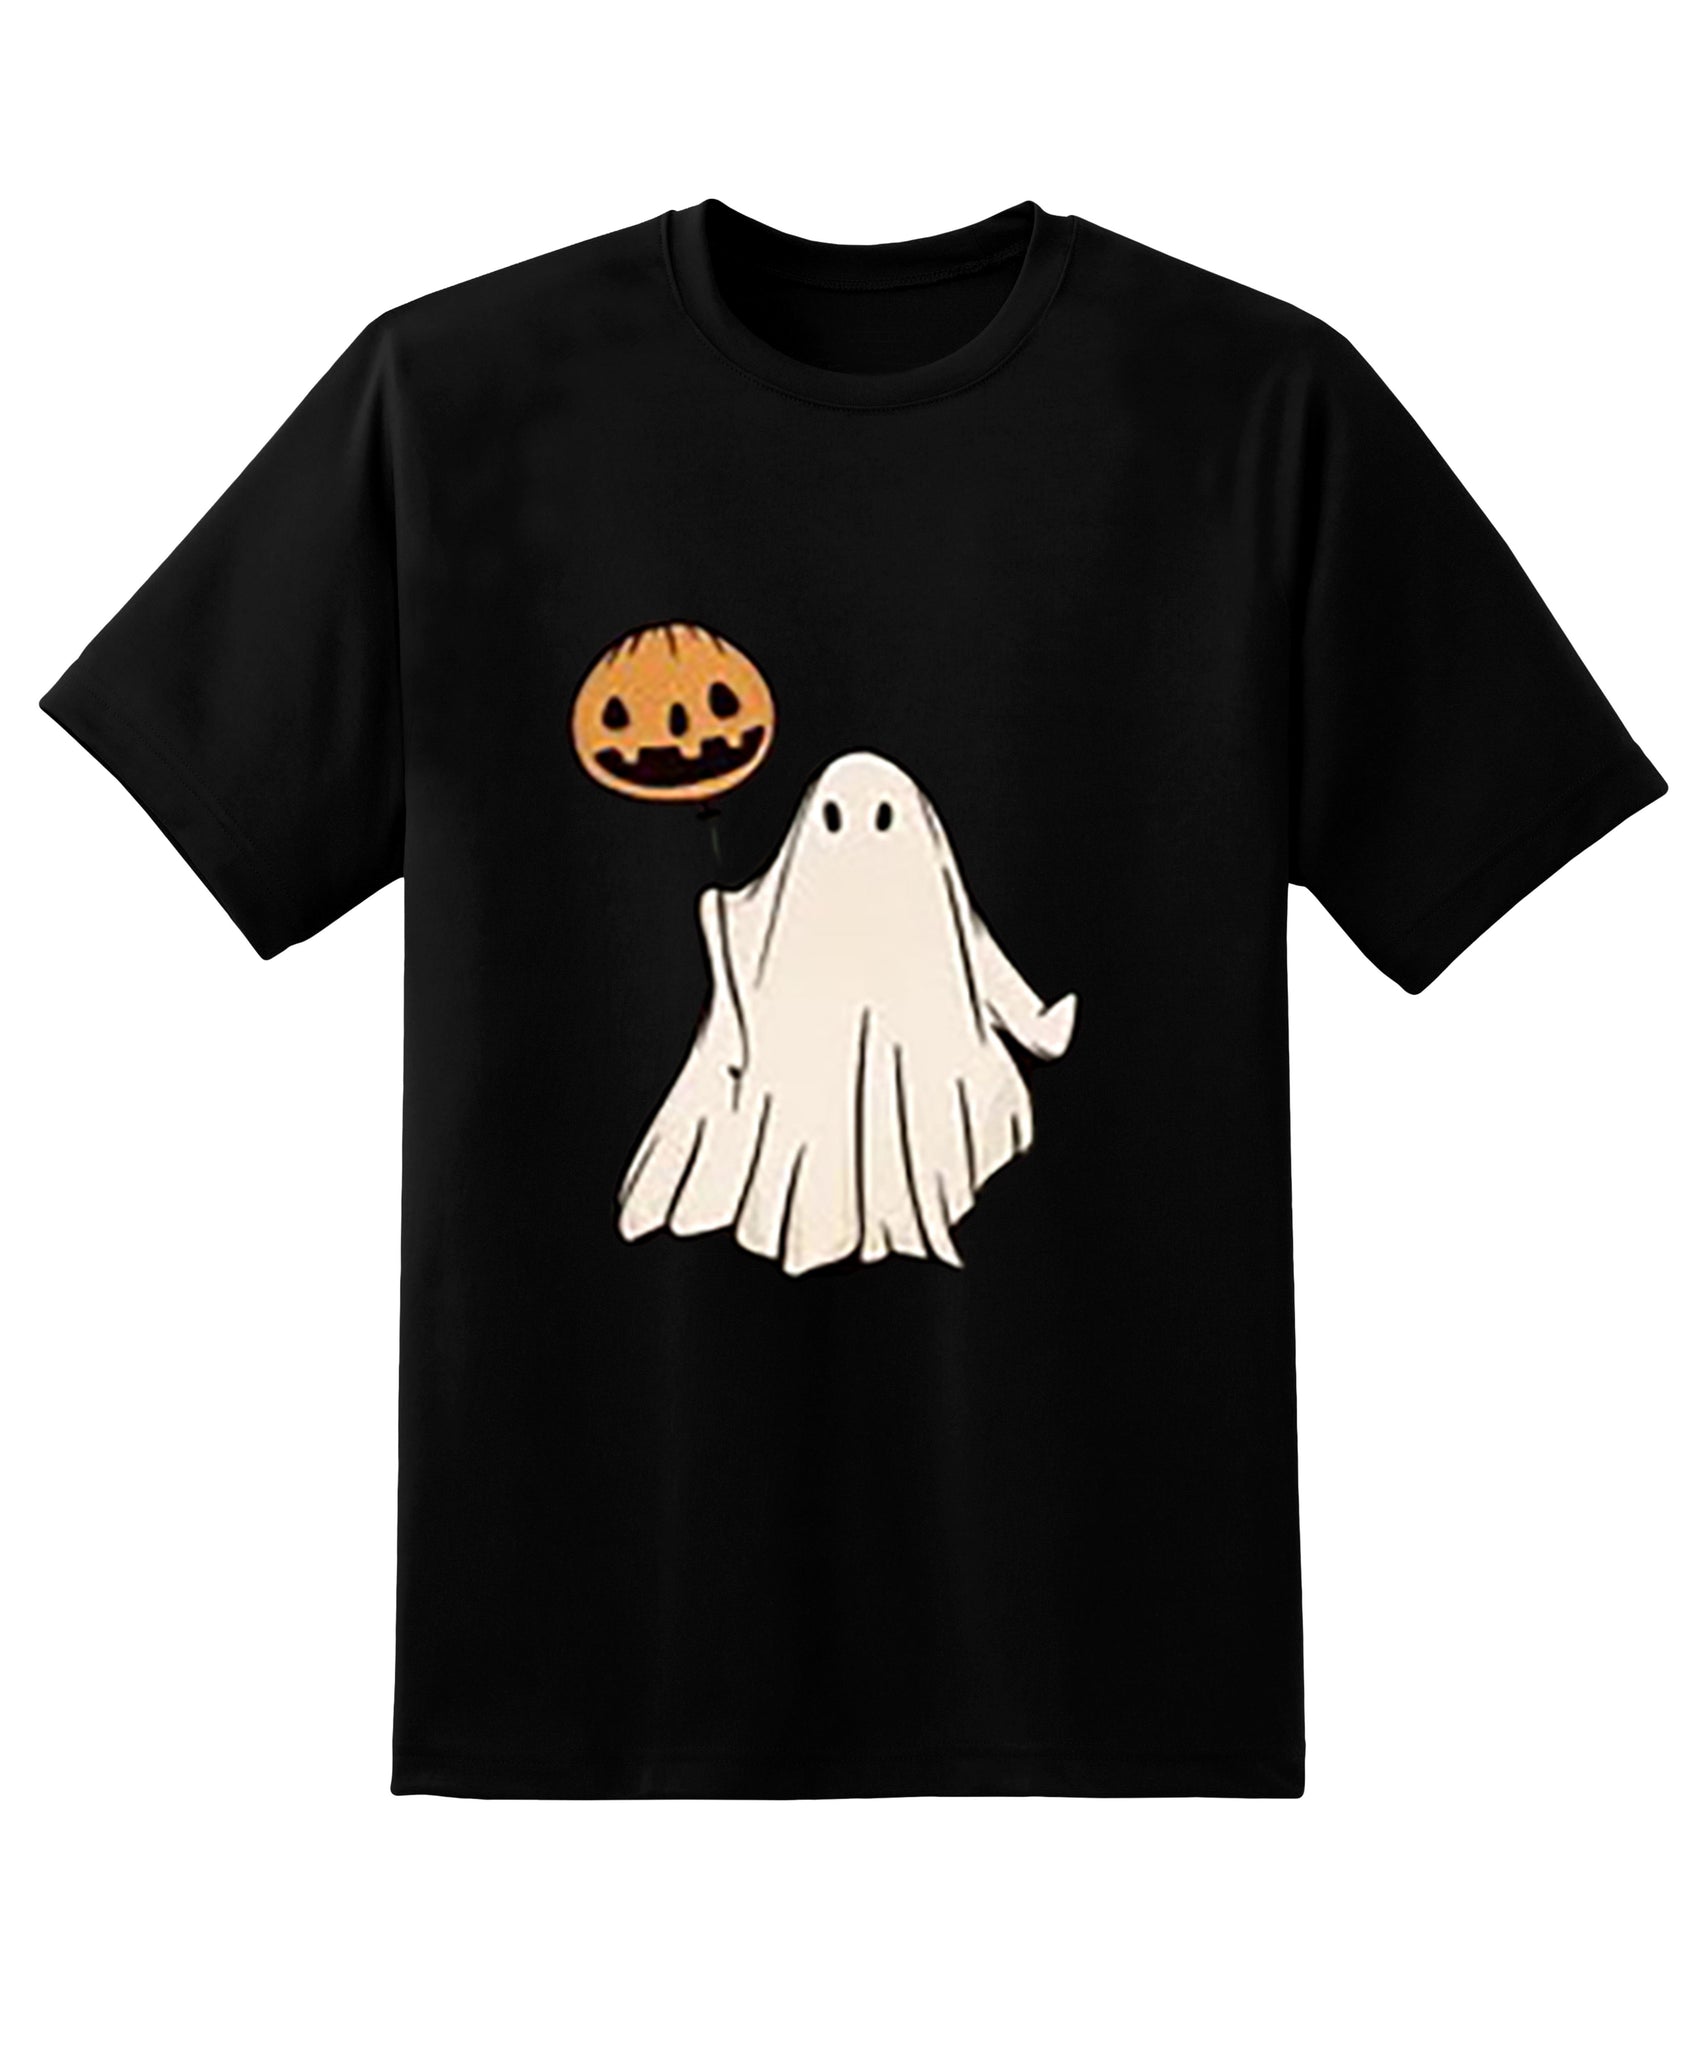 Skitongift Spooky Season T-Shirt,Crewneck T-Shirt,Pumpkin Fall,Cute And Scary,Autumn Shirt,Spooky T-Shirt,Halloween,Ghost